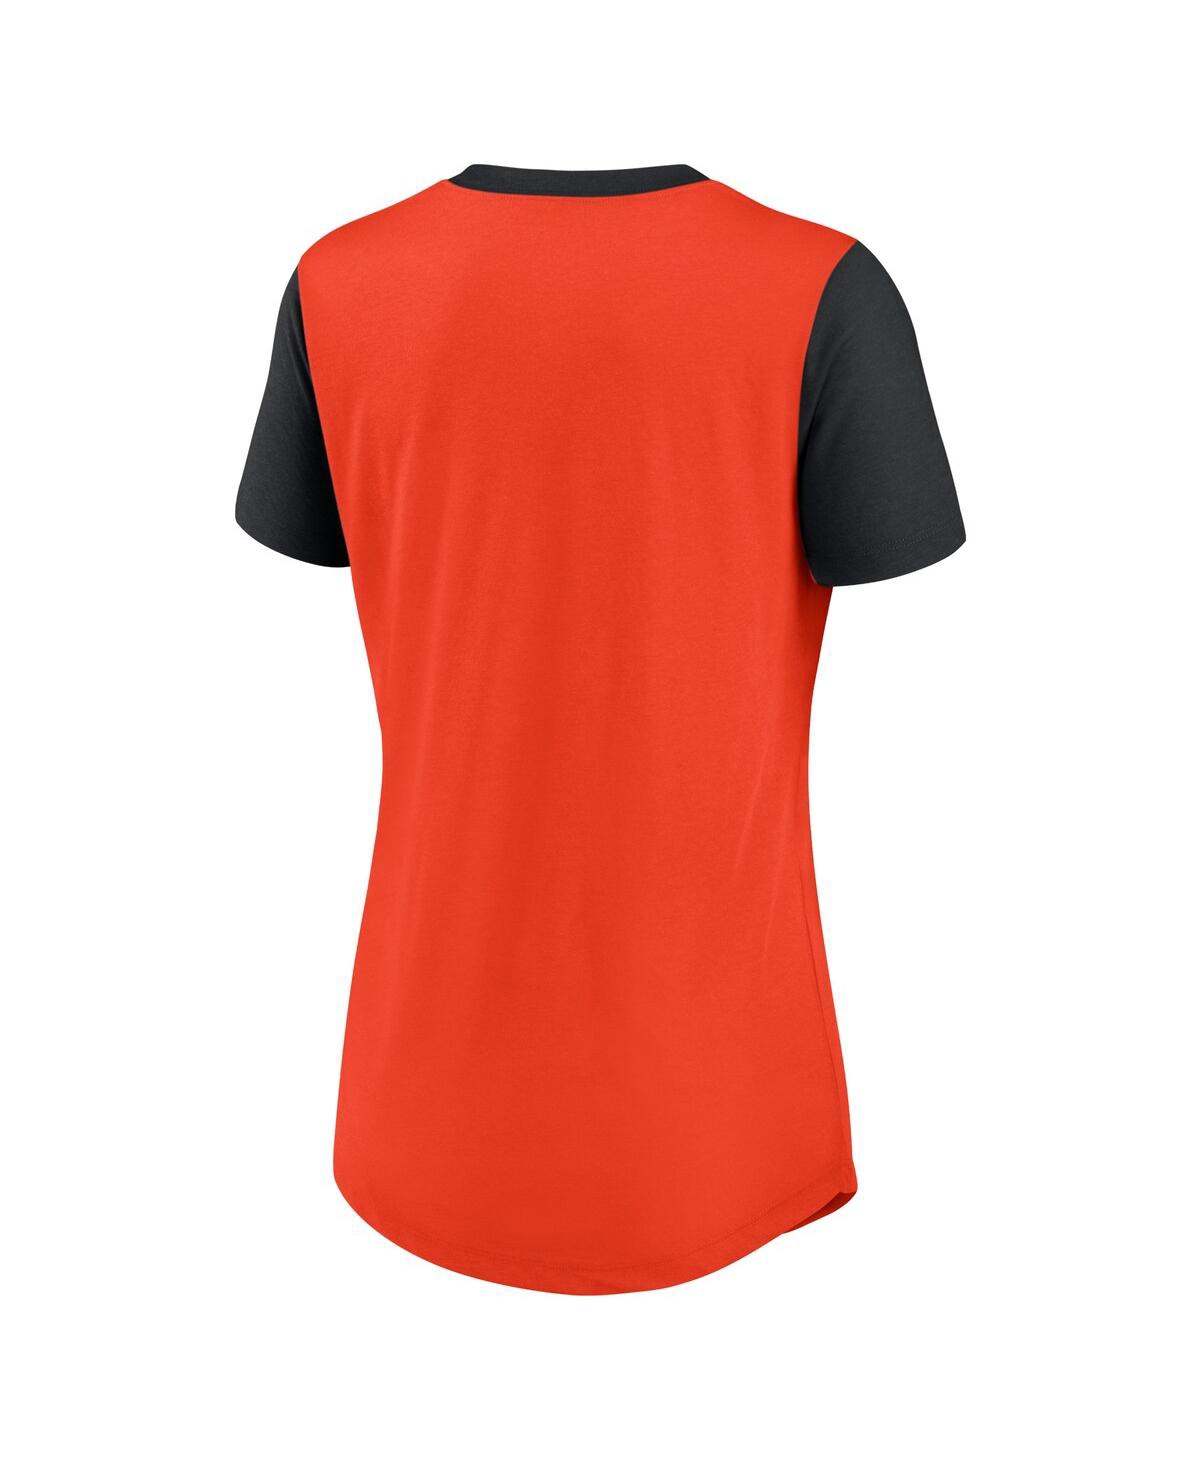 Shop Nike Women's  Orange San Francisco Giants Hipster Swoosh Cinched Tri-blend Performance Fashion T-shir